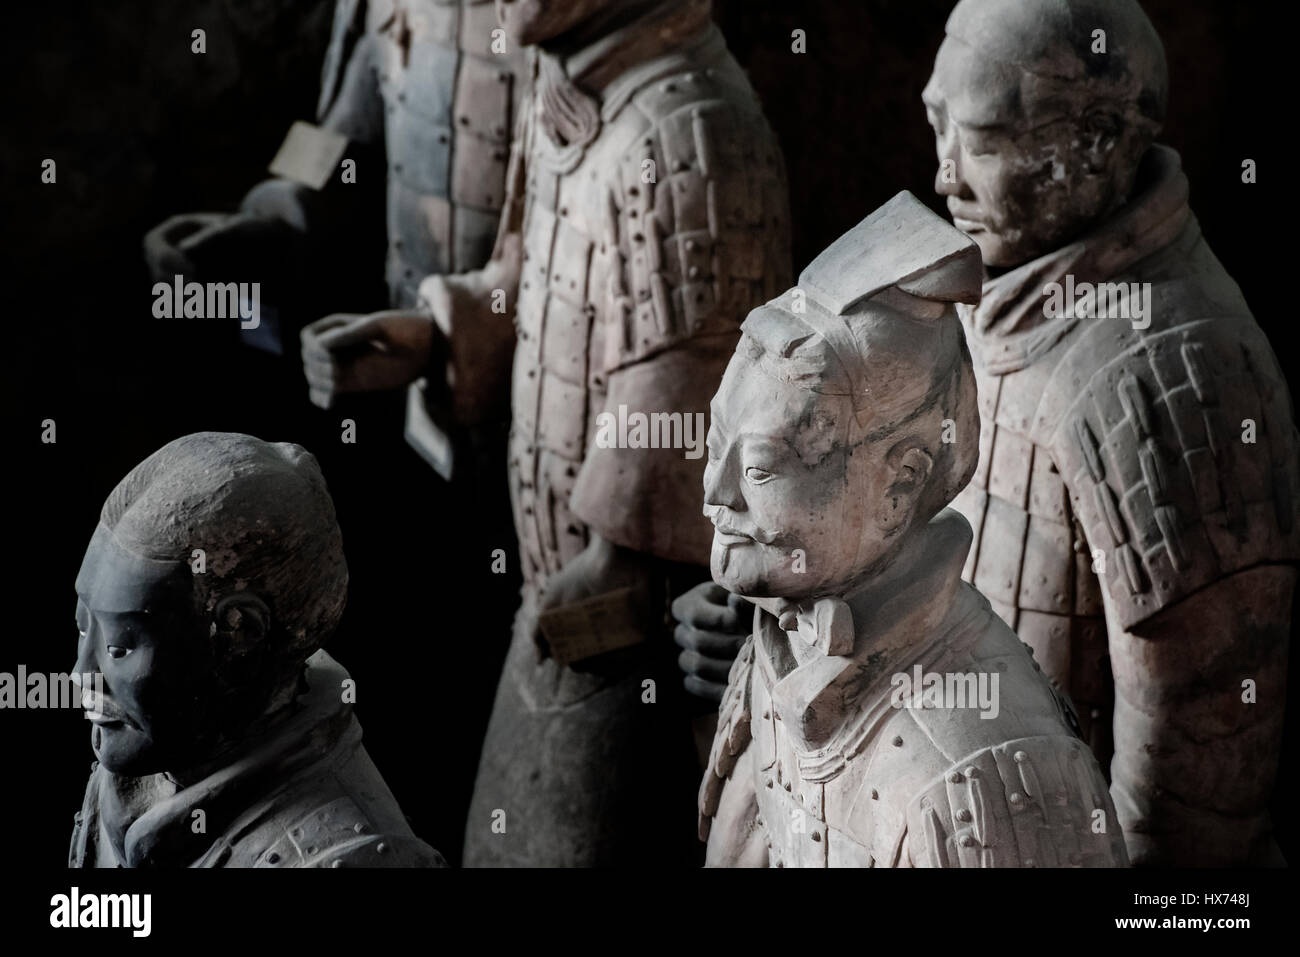 L'Armata di Terracotta in un museo di Qin Shi Huang la tomba nel 210-209 A.C. Xian della Cina. Foto Stock